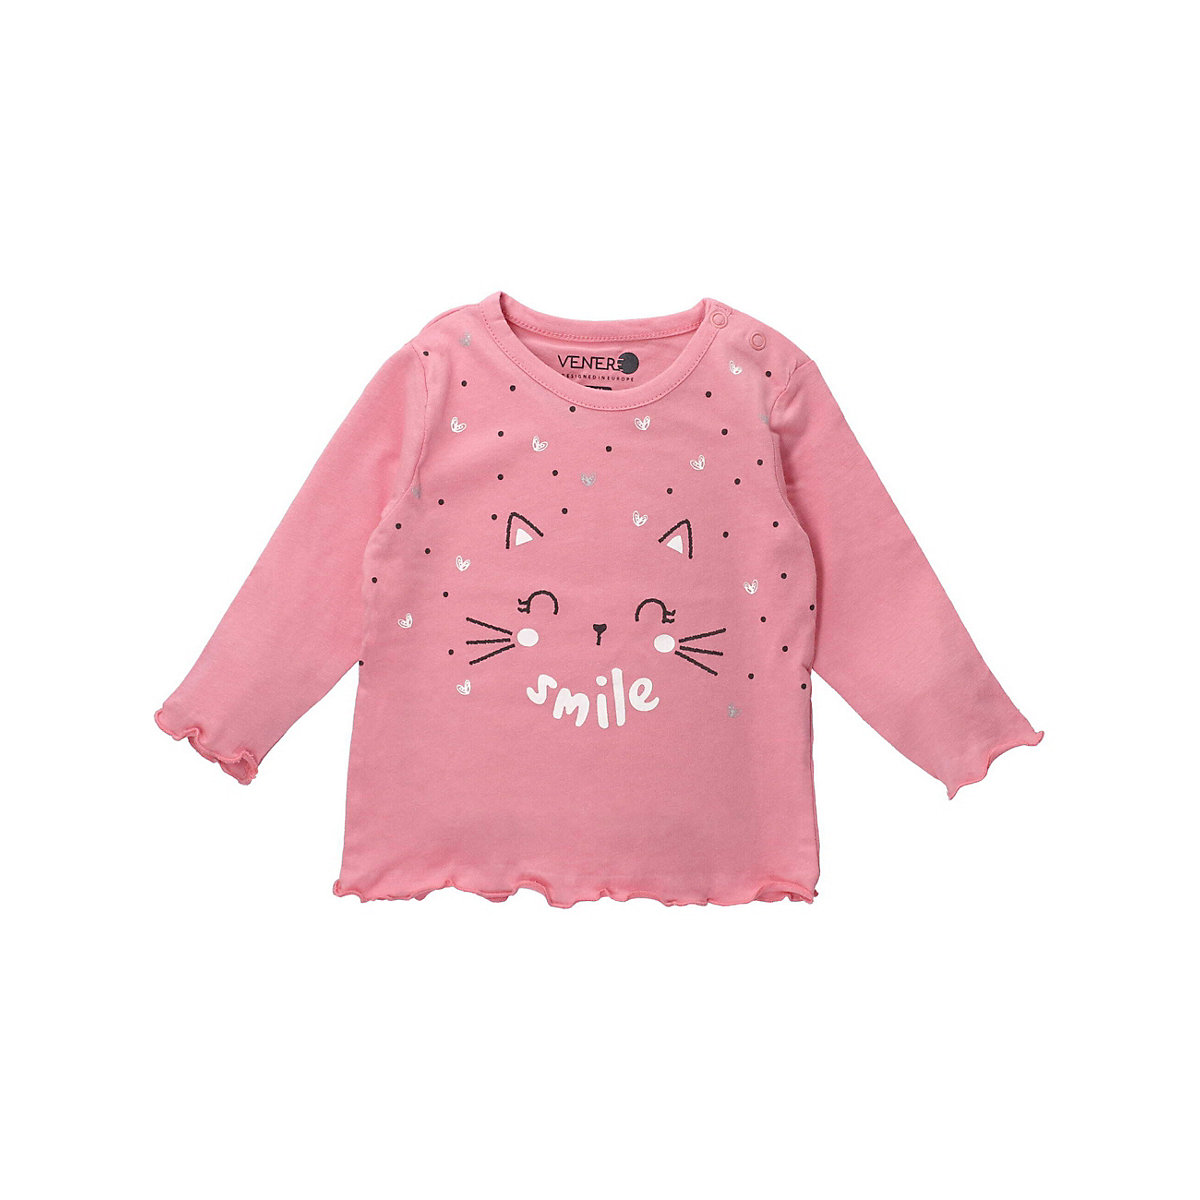 VENERE Shirt Langarm Herbst Winter Langarmshirts für Mädchen rosa